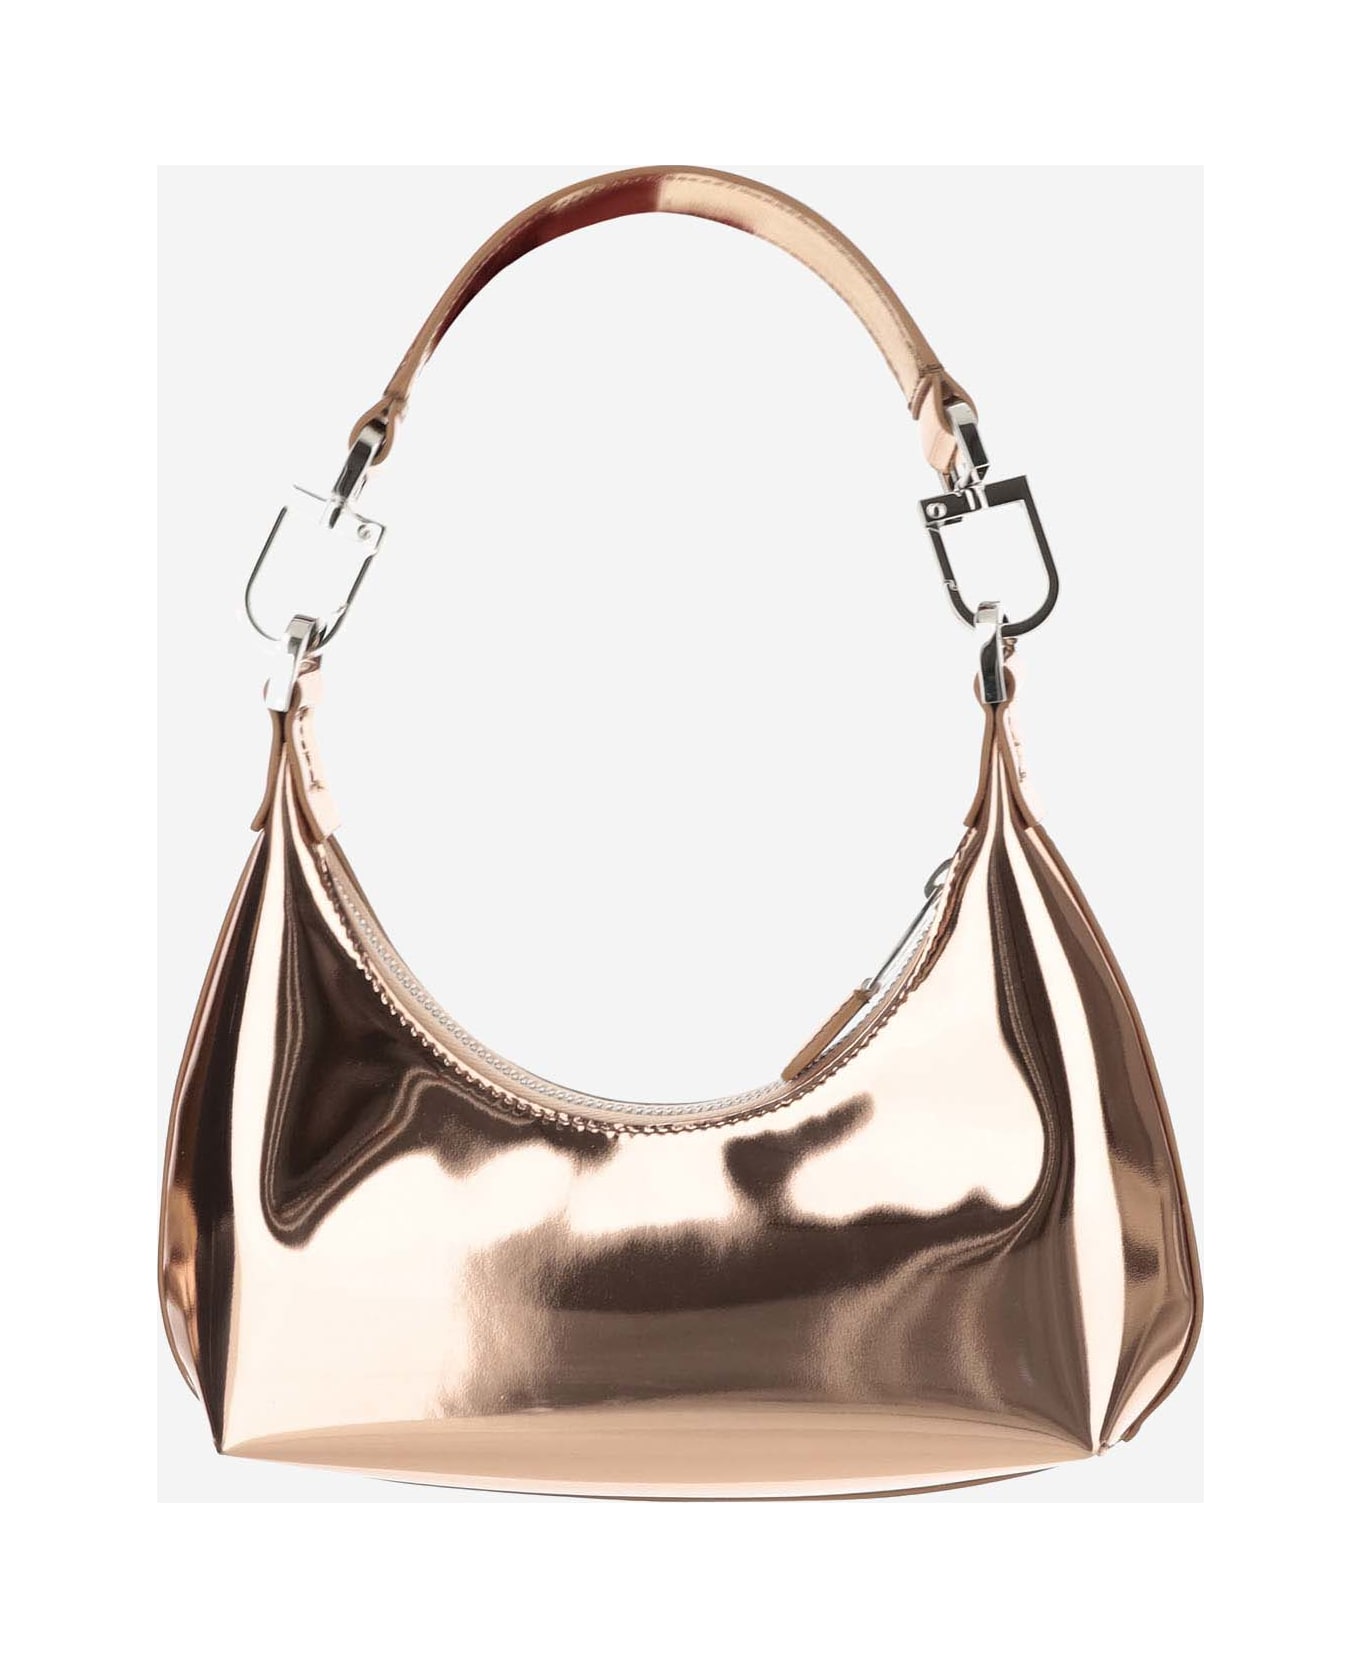 Giorgio Armani Metallic Nappa Leather Bag With Logo - Golden トートバッグ